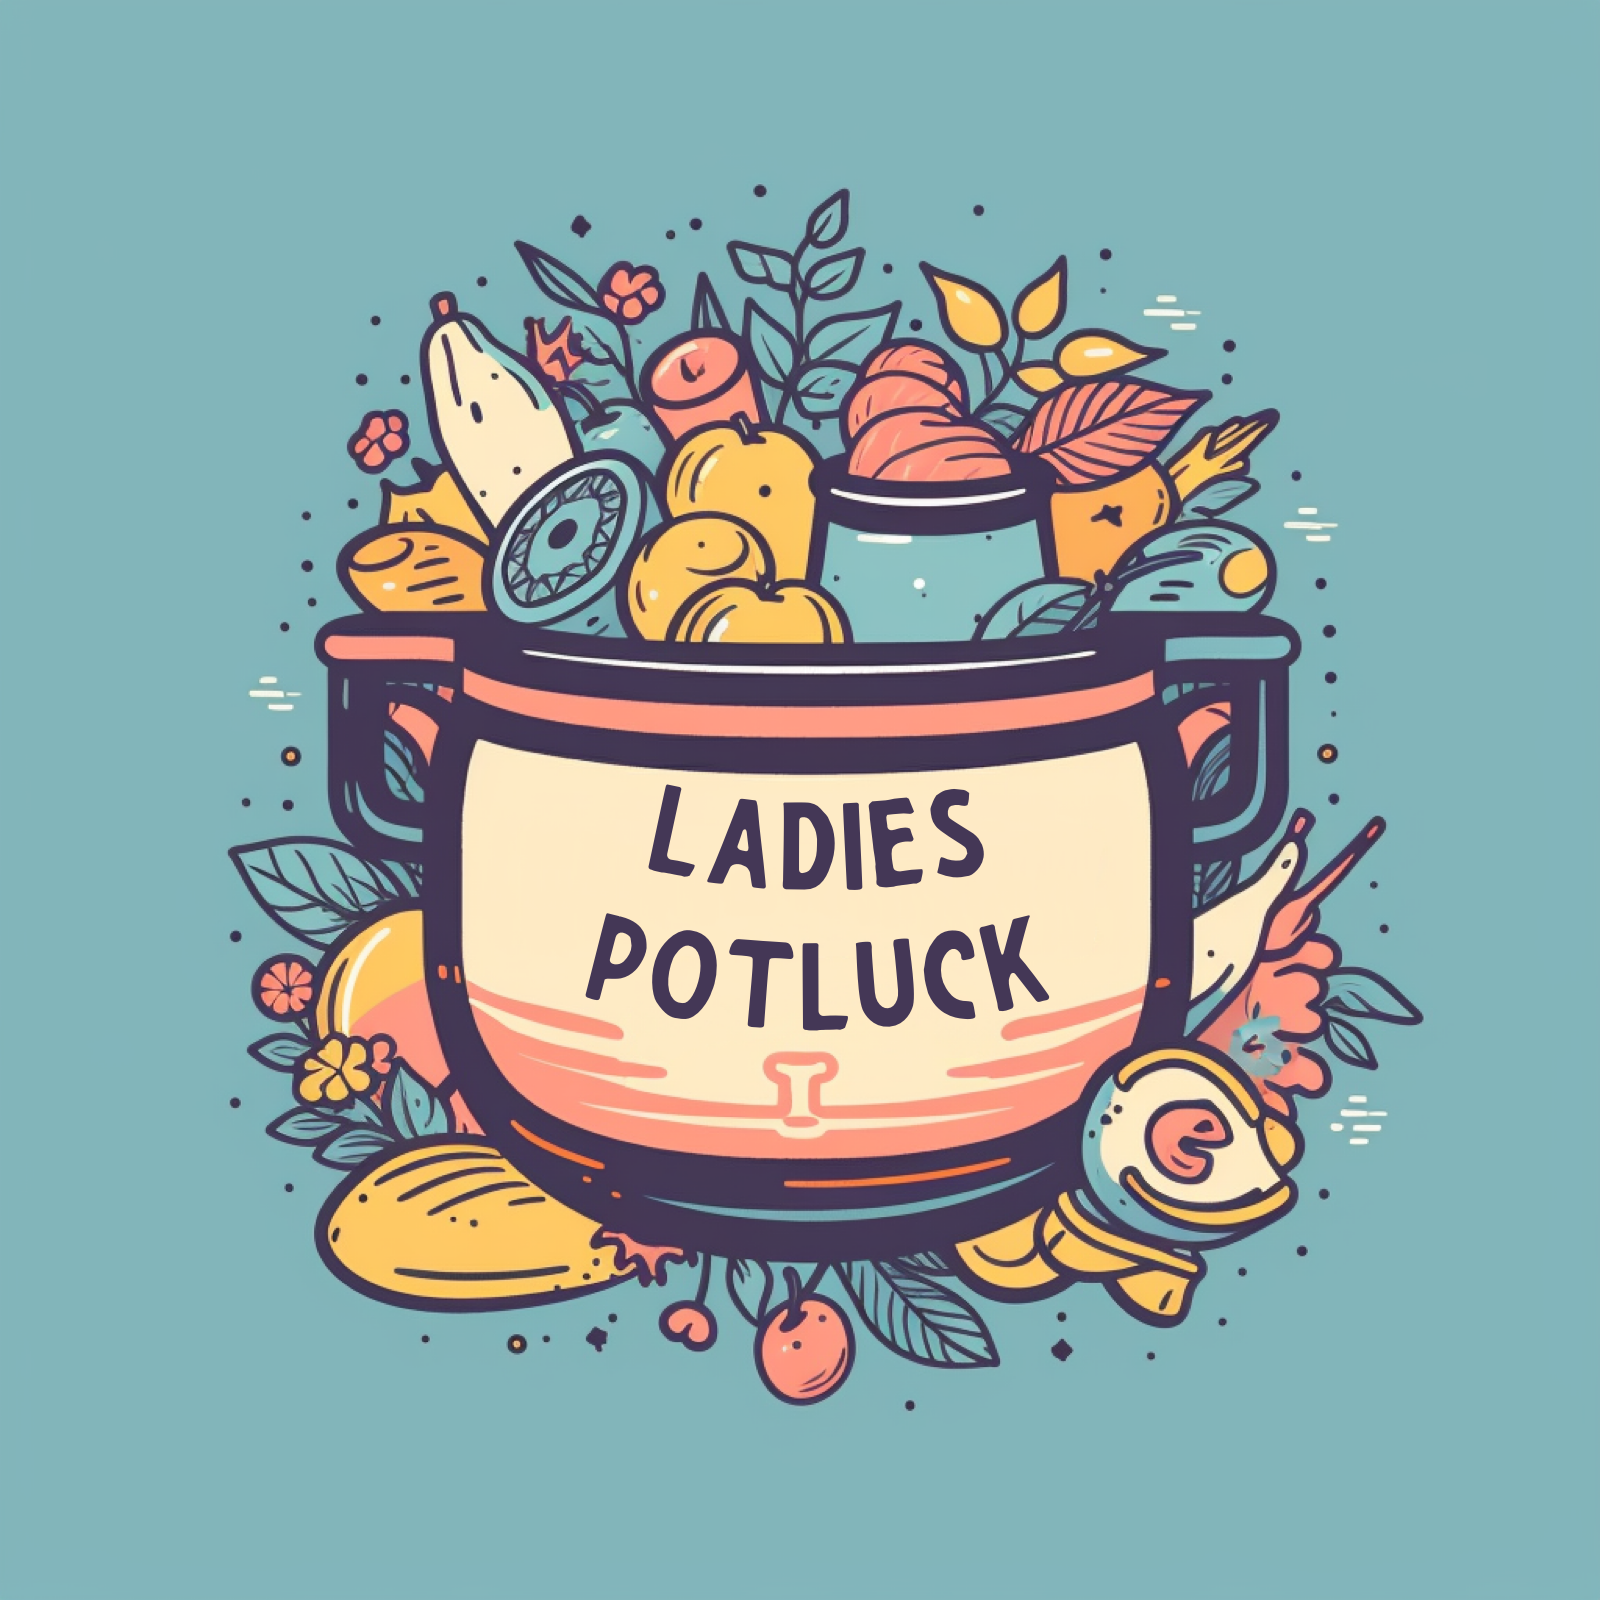 Ladies Potluck_Square.PNG image